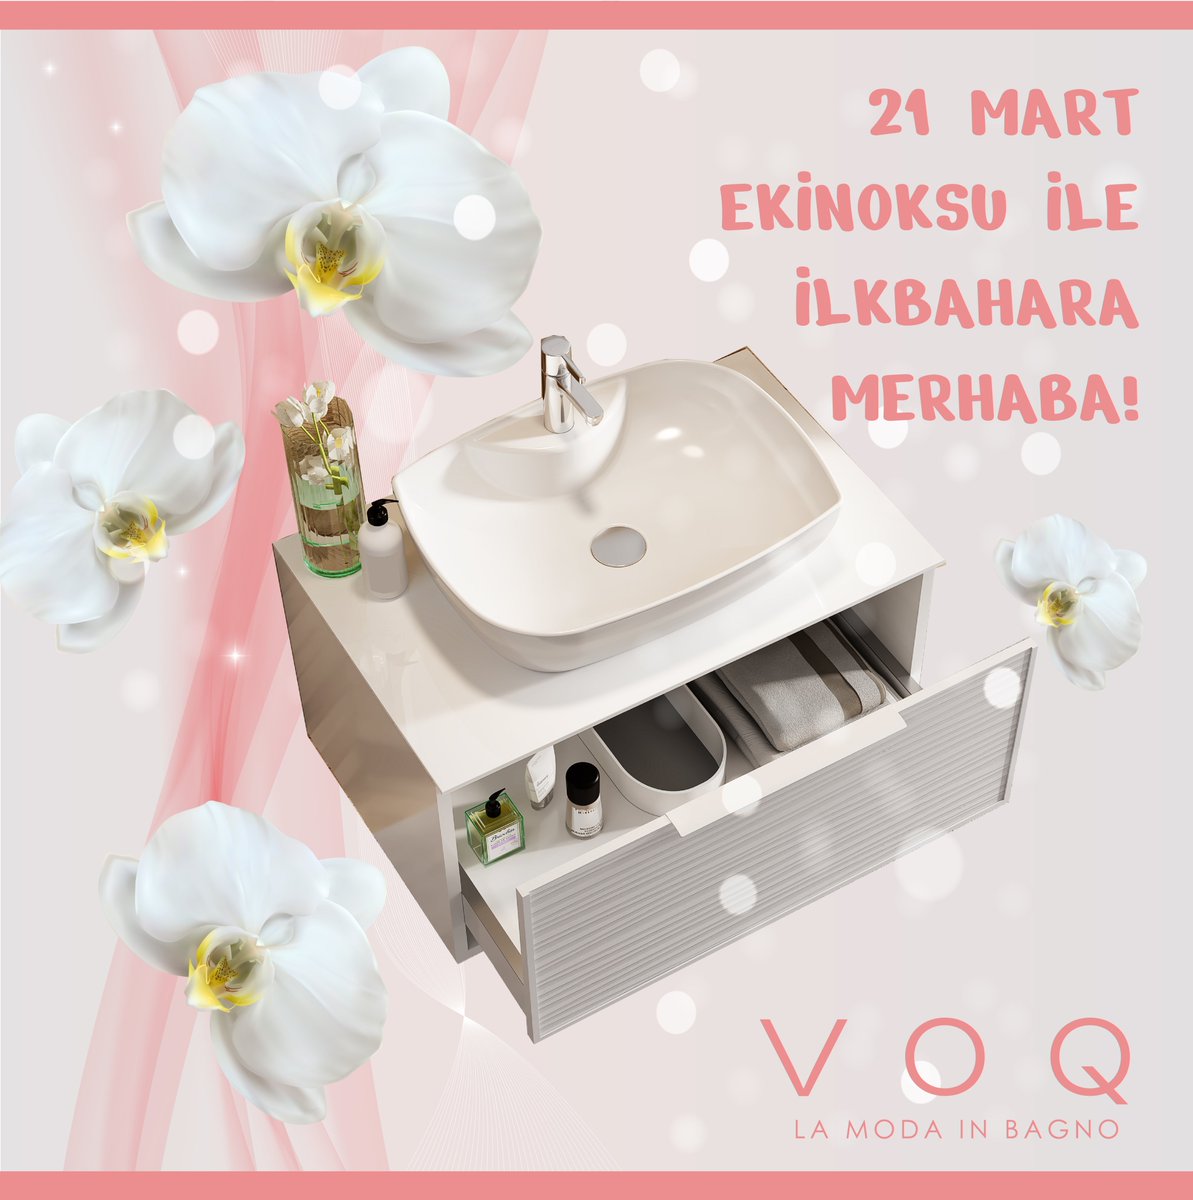 21 Mart ekinoksu ile ilkbahara merhaba! Hello spring with the March 21 equinox! #voq #voqbagno #lamodainbagno #arredobagno #bathroomfurniture #banyomobilyası #equinox #ekinoks